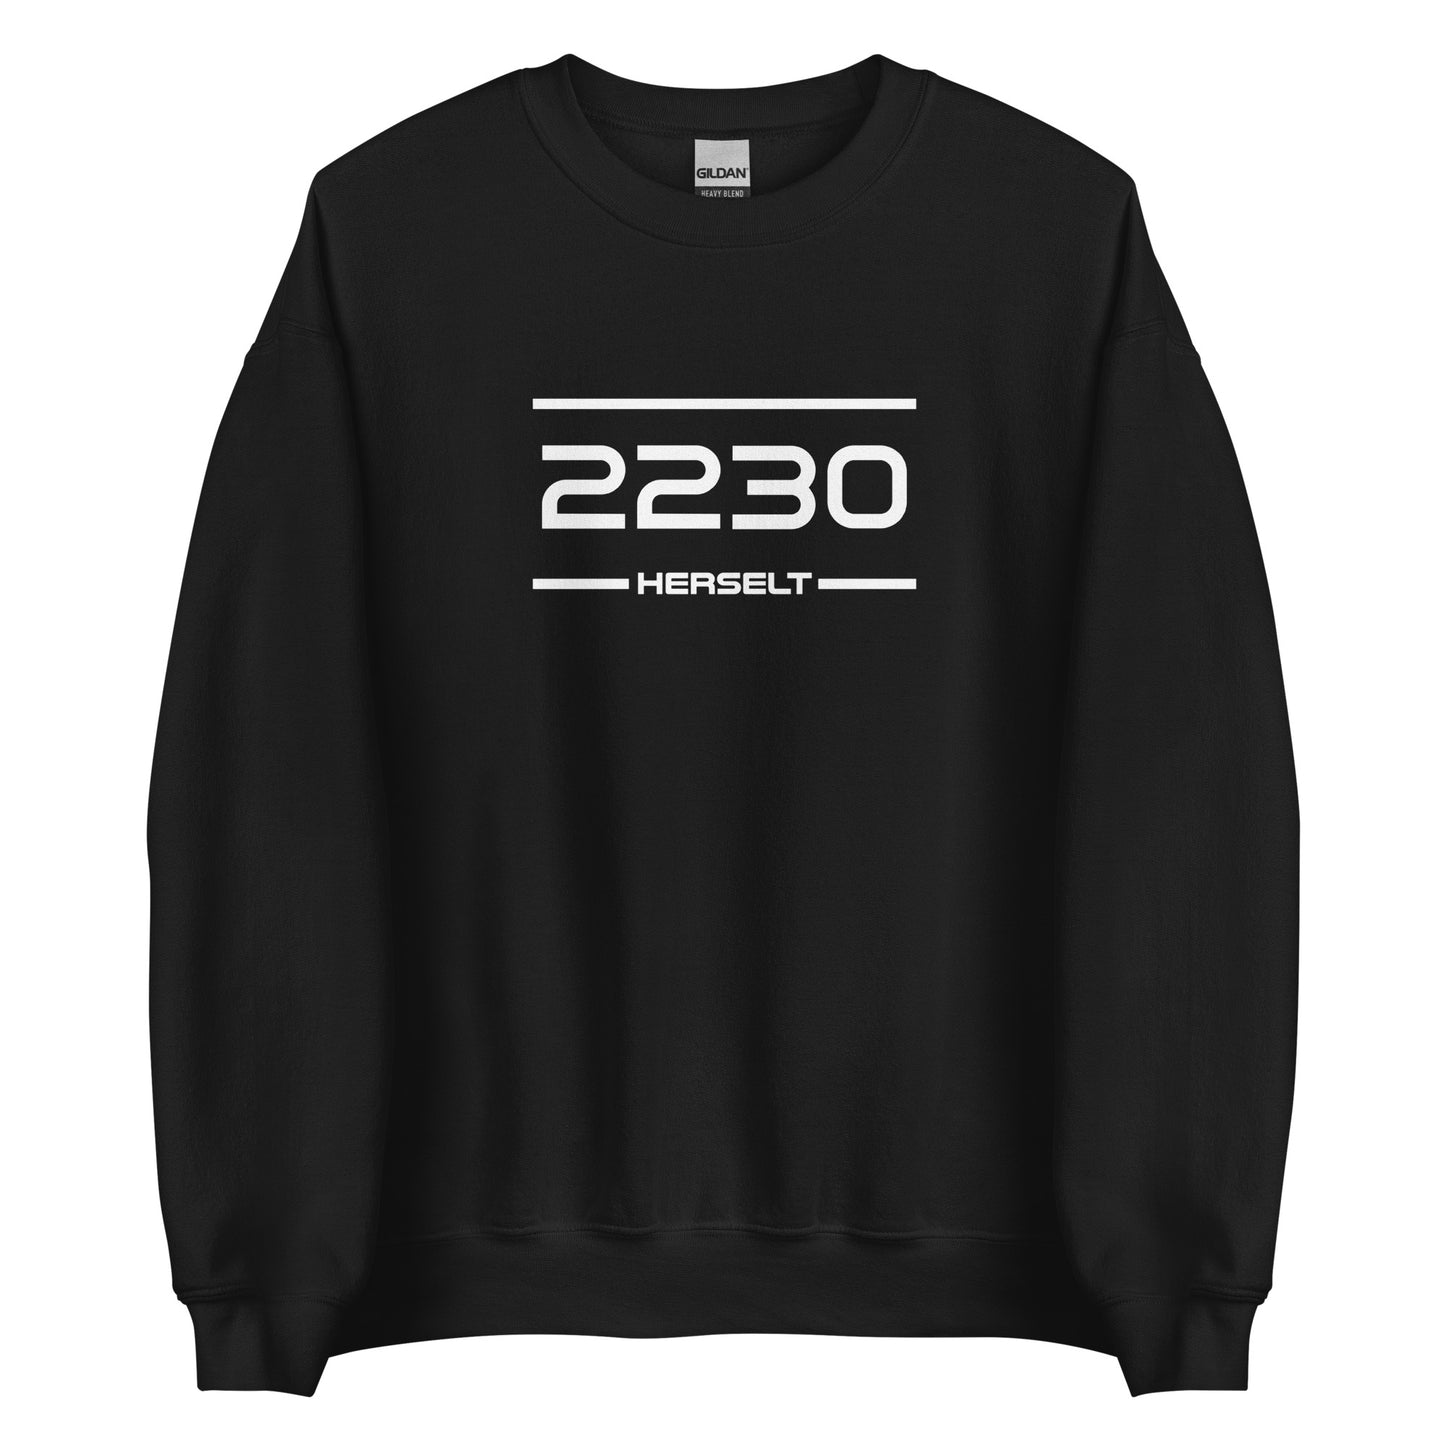 Sweater - 2230 - Herselt (M/V)